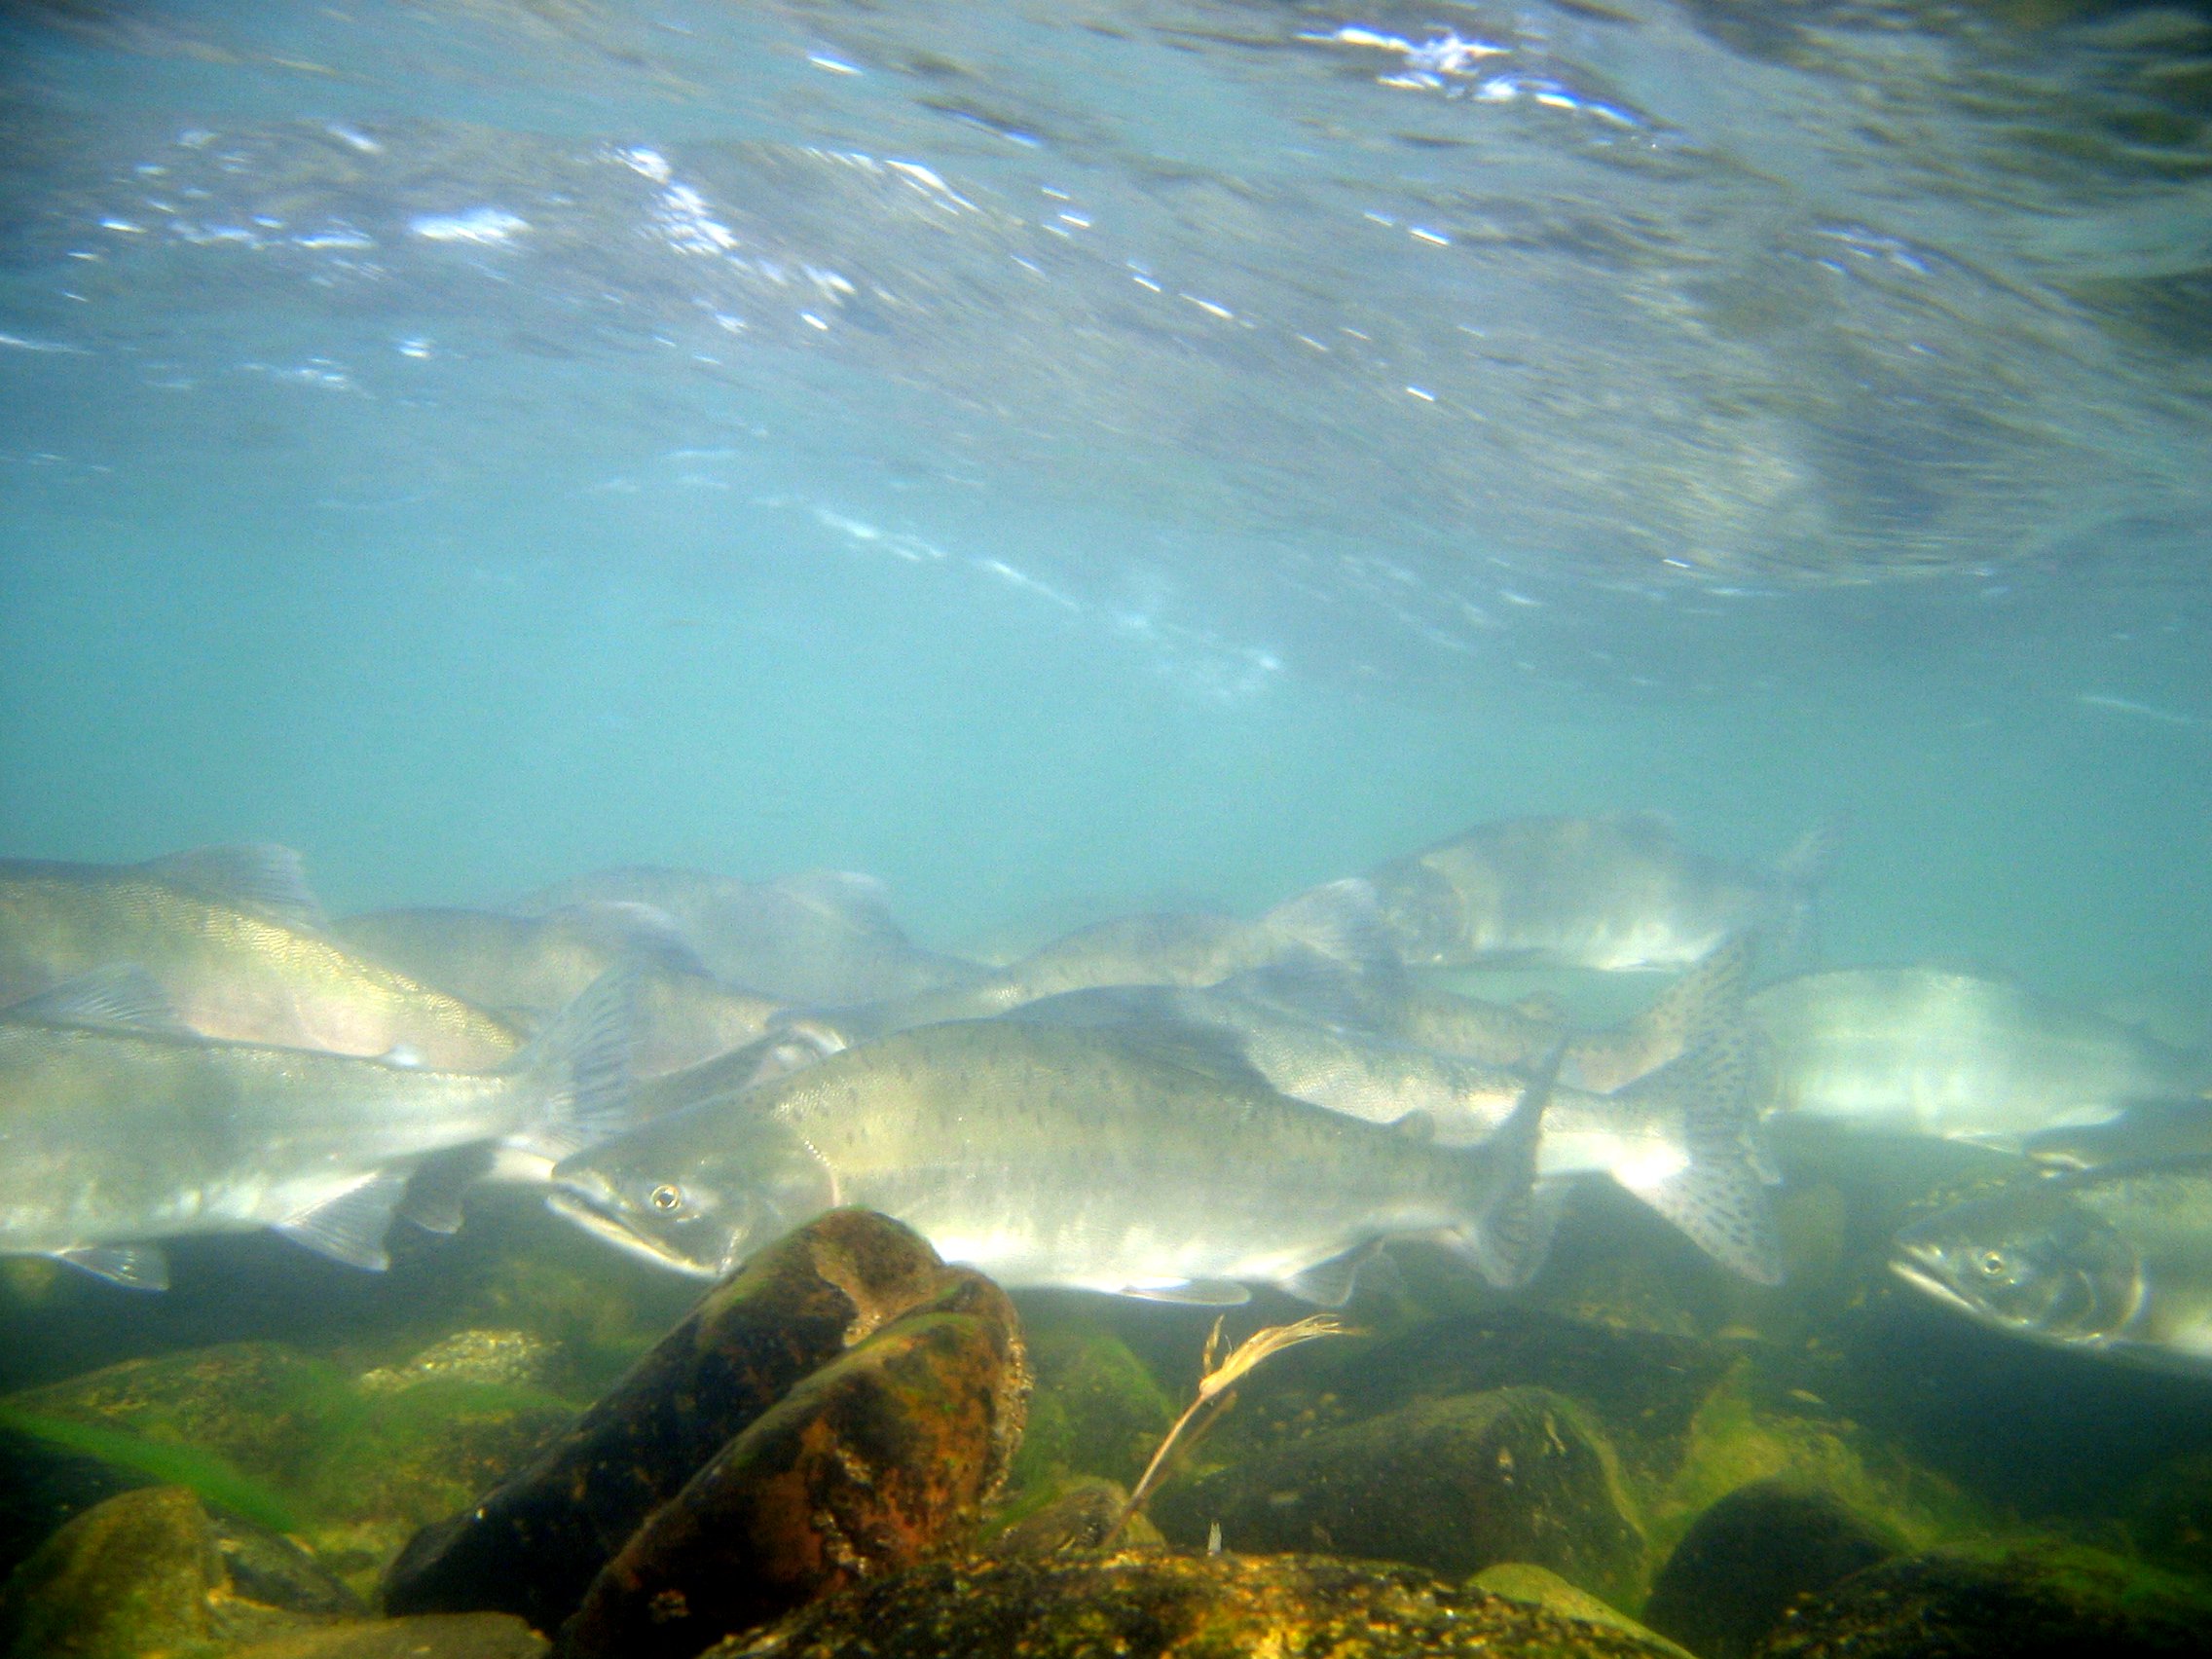 underwater photo of salmon swimming in river